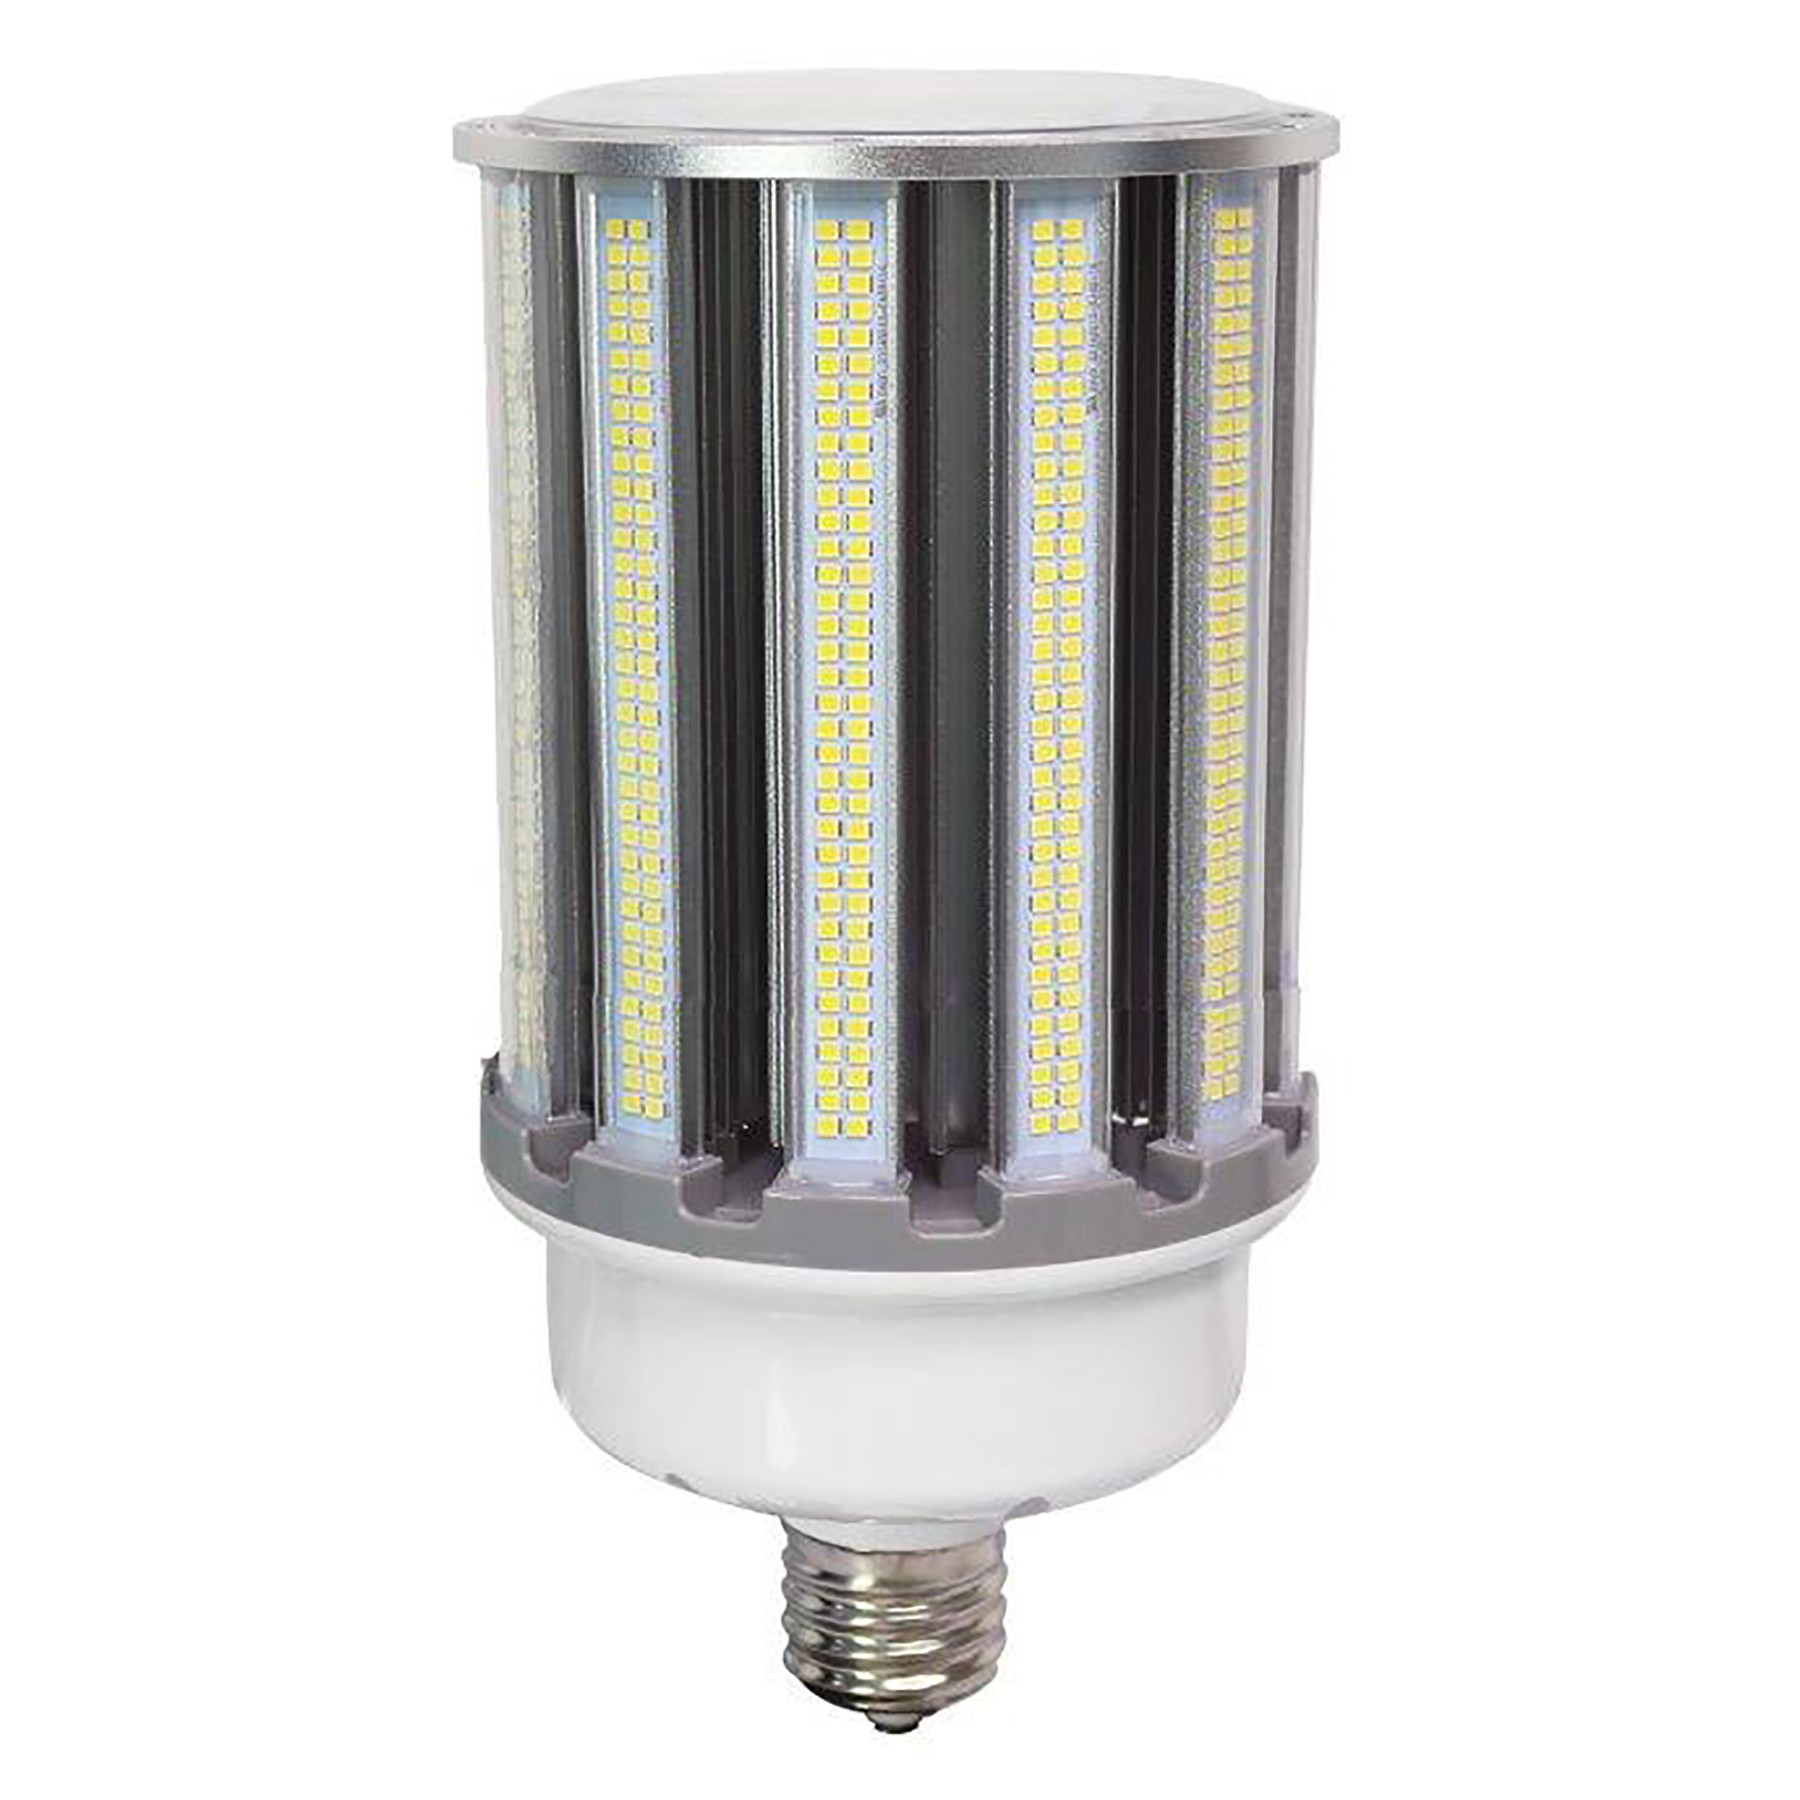 LED Corn Cob Bulb 120W E39 Base (275W Equiv) 16,800 Lumens by LumeGen